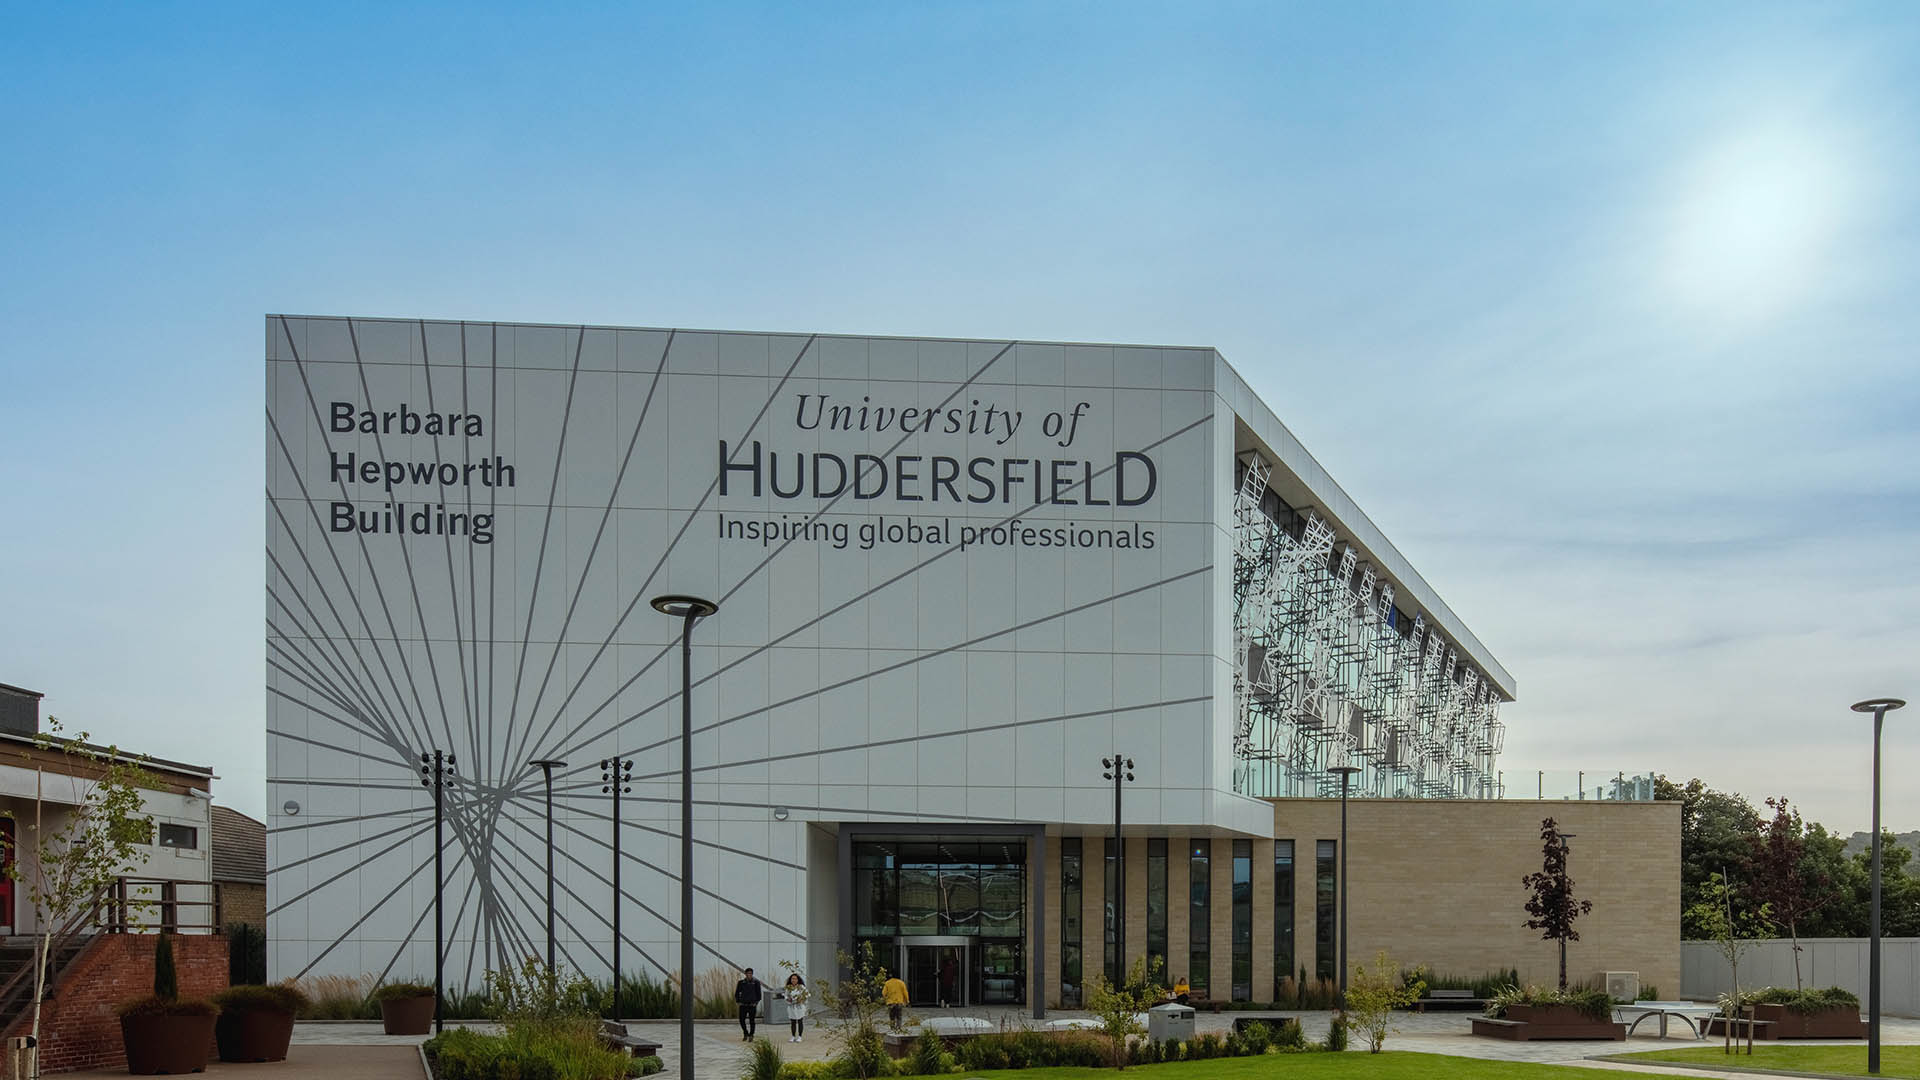 University of Huddersfield on rise in world university rankings